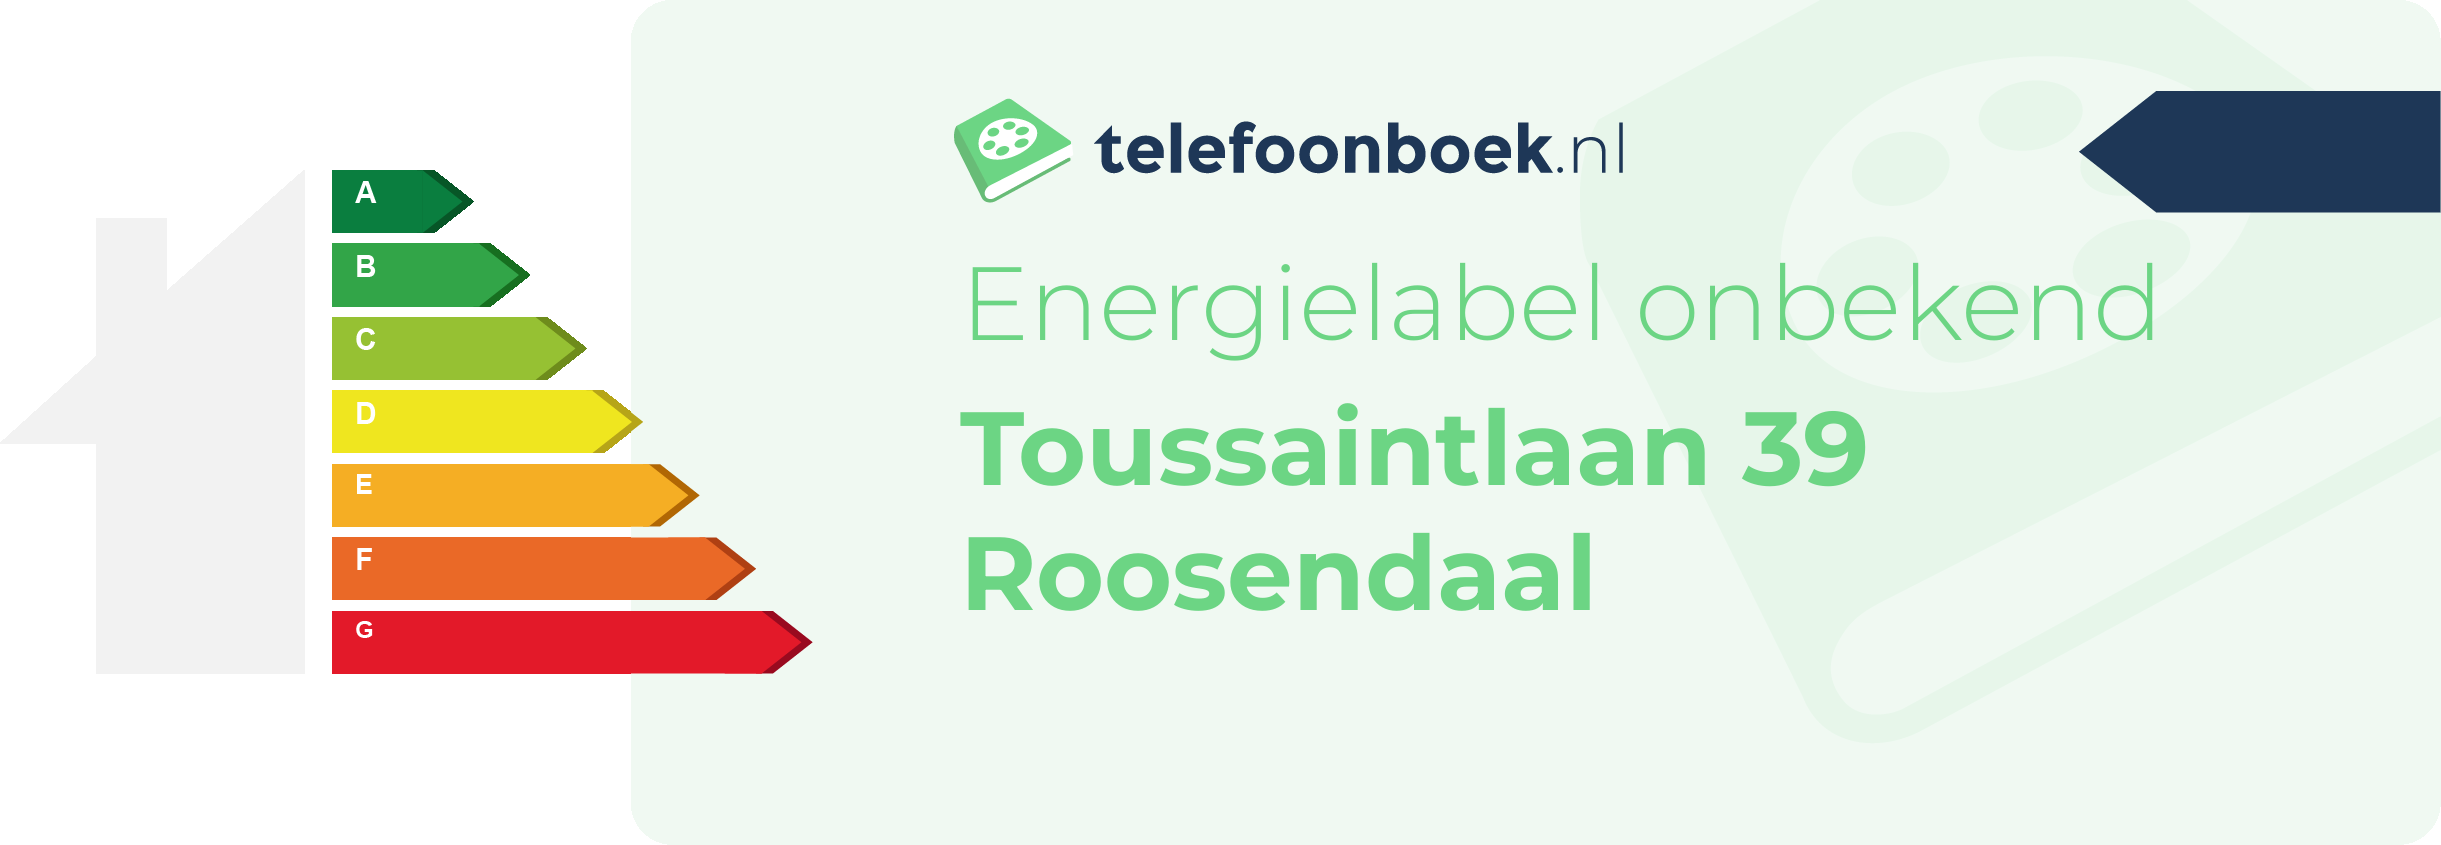 Energielabel Toussaintlaan 39 Roosendaal